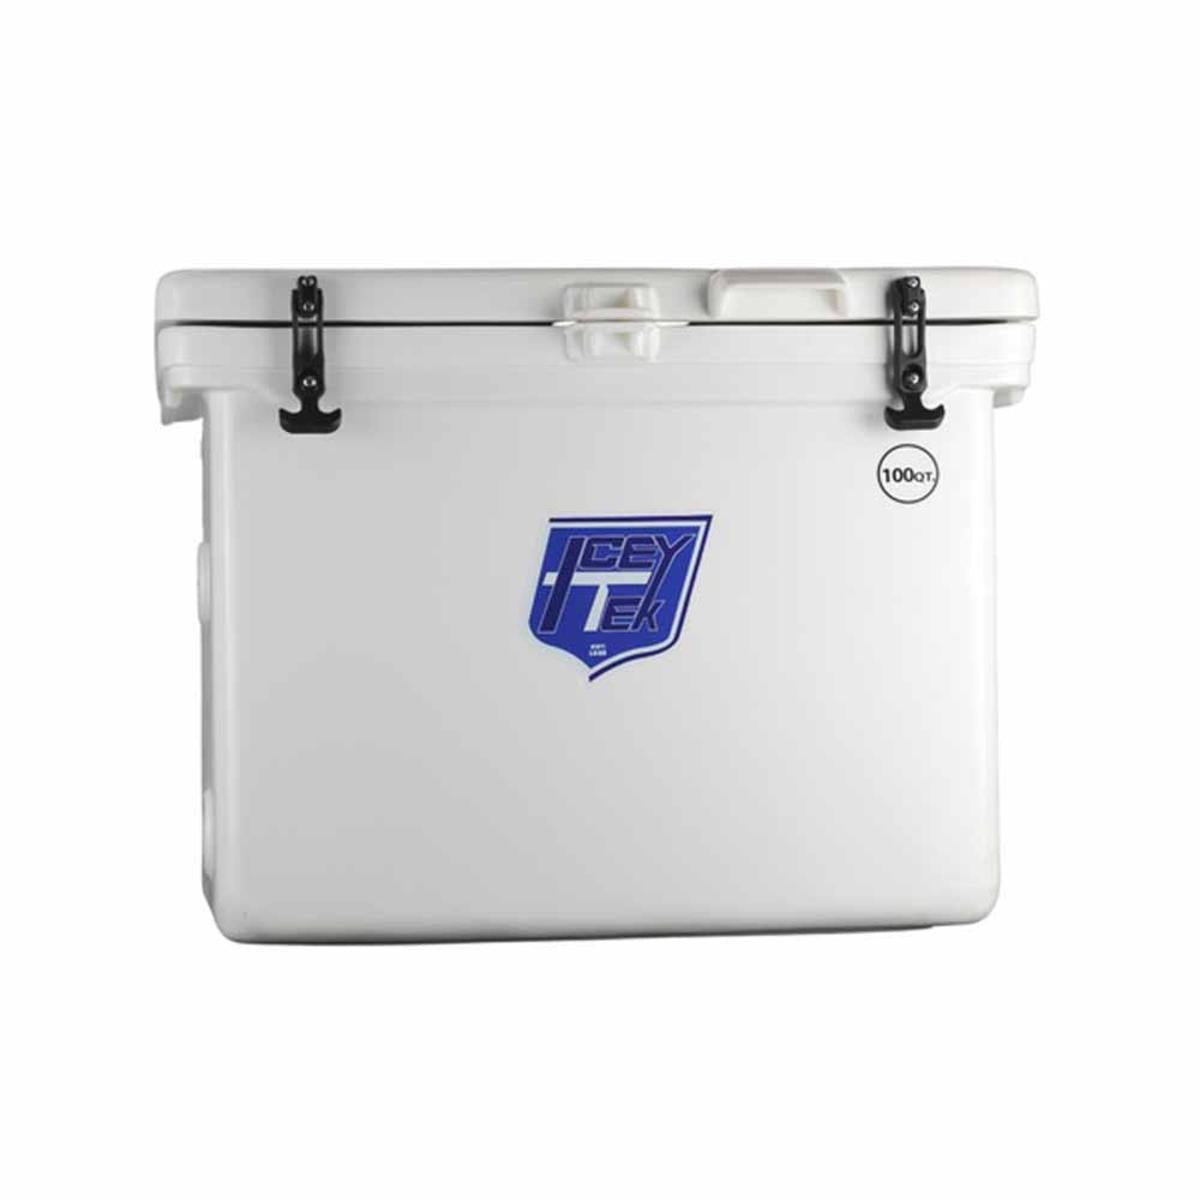 Icey-Tek 100 Quart Rotomold Cooler